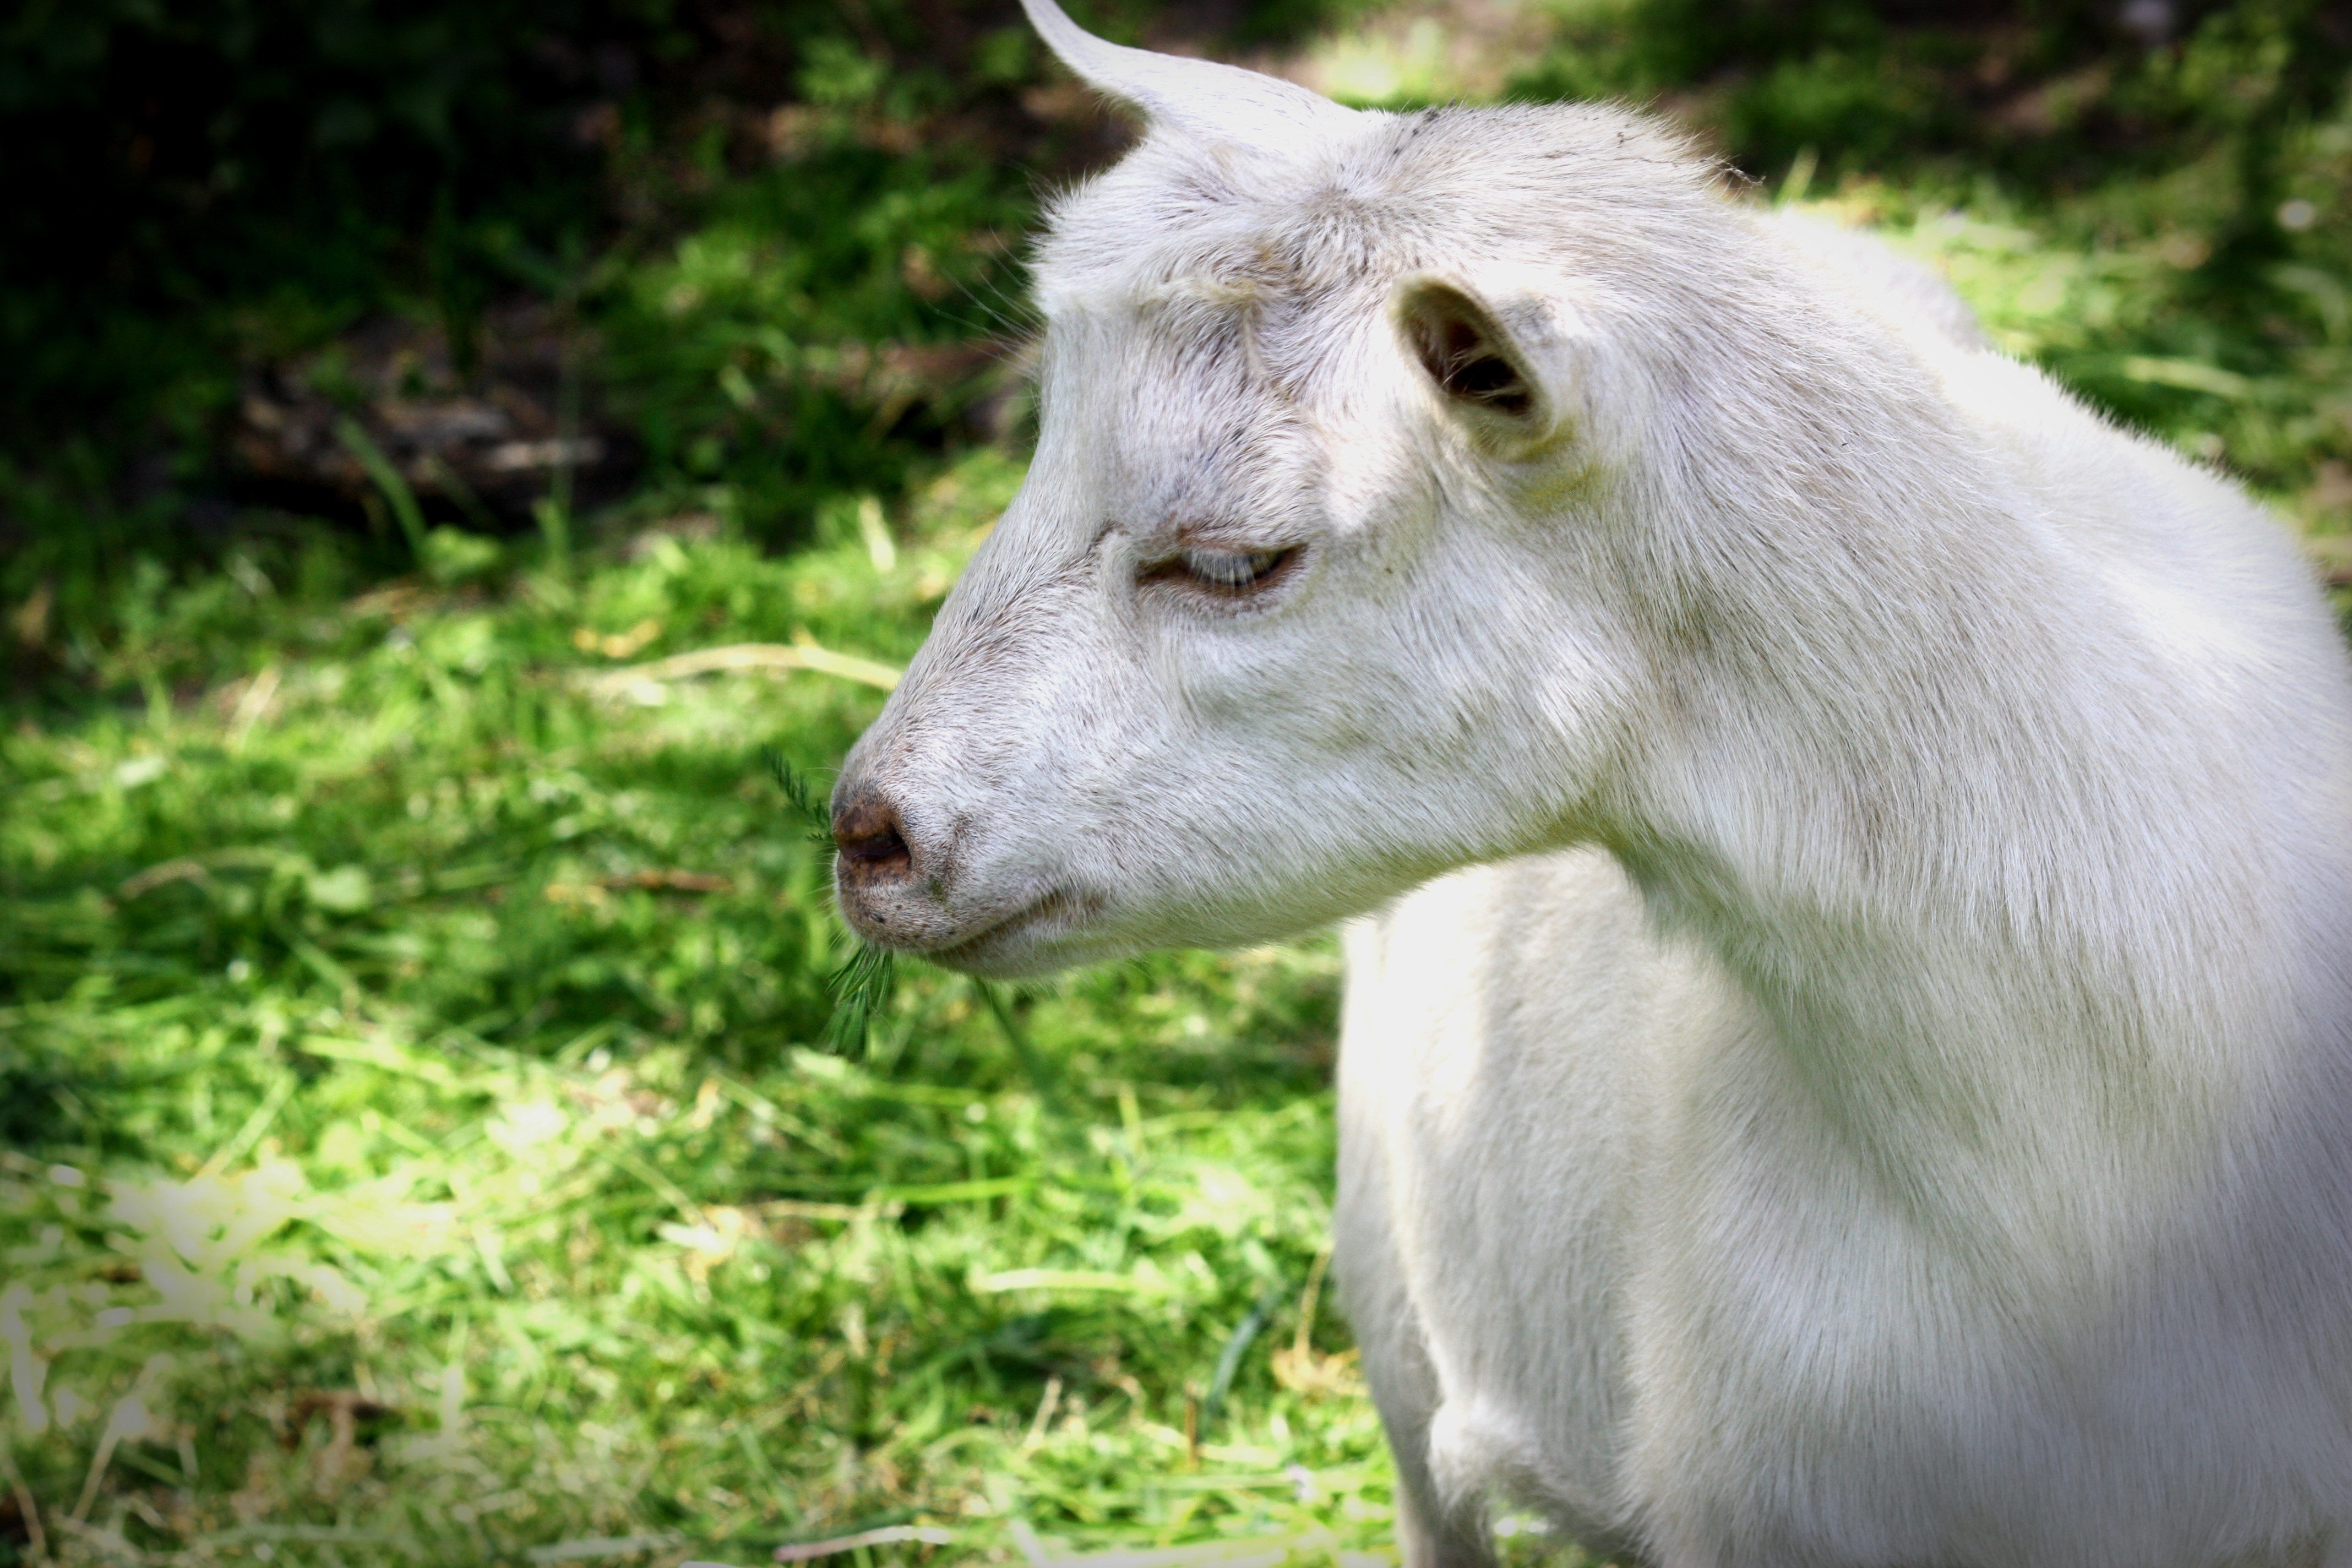 Pet, Livestock, Goat, Billy Goat, animal themes, one animal